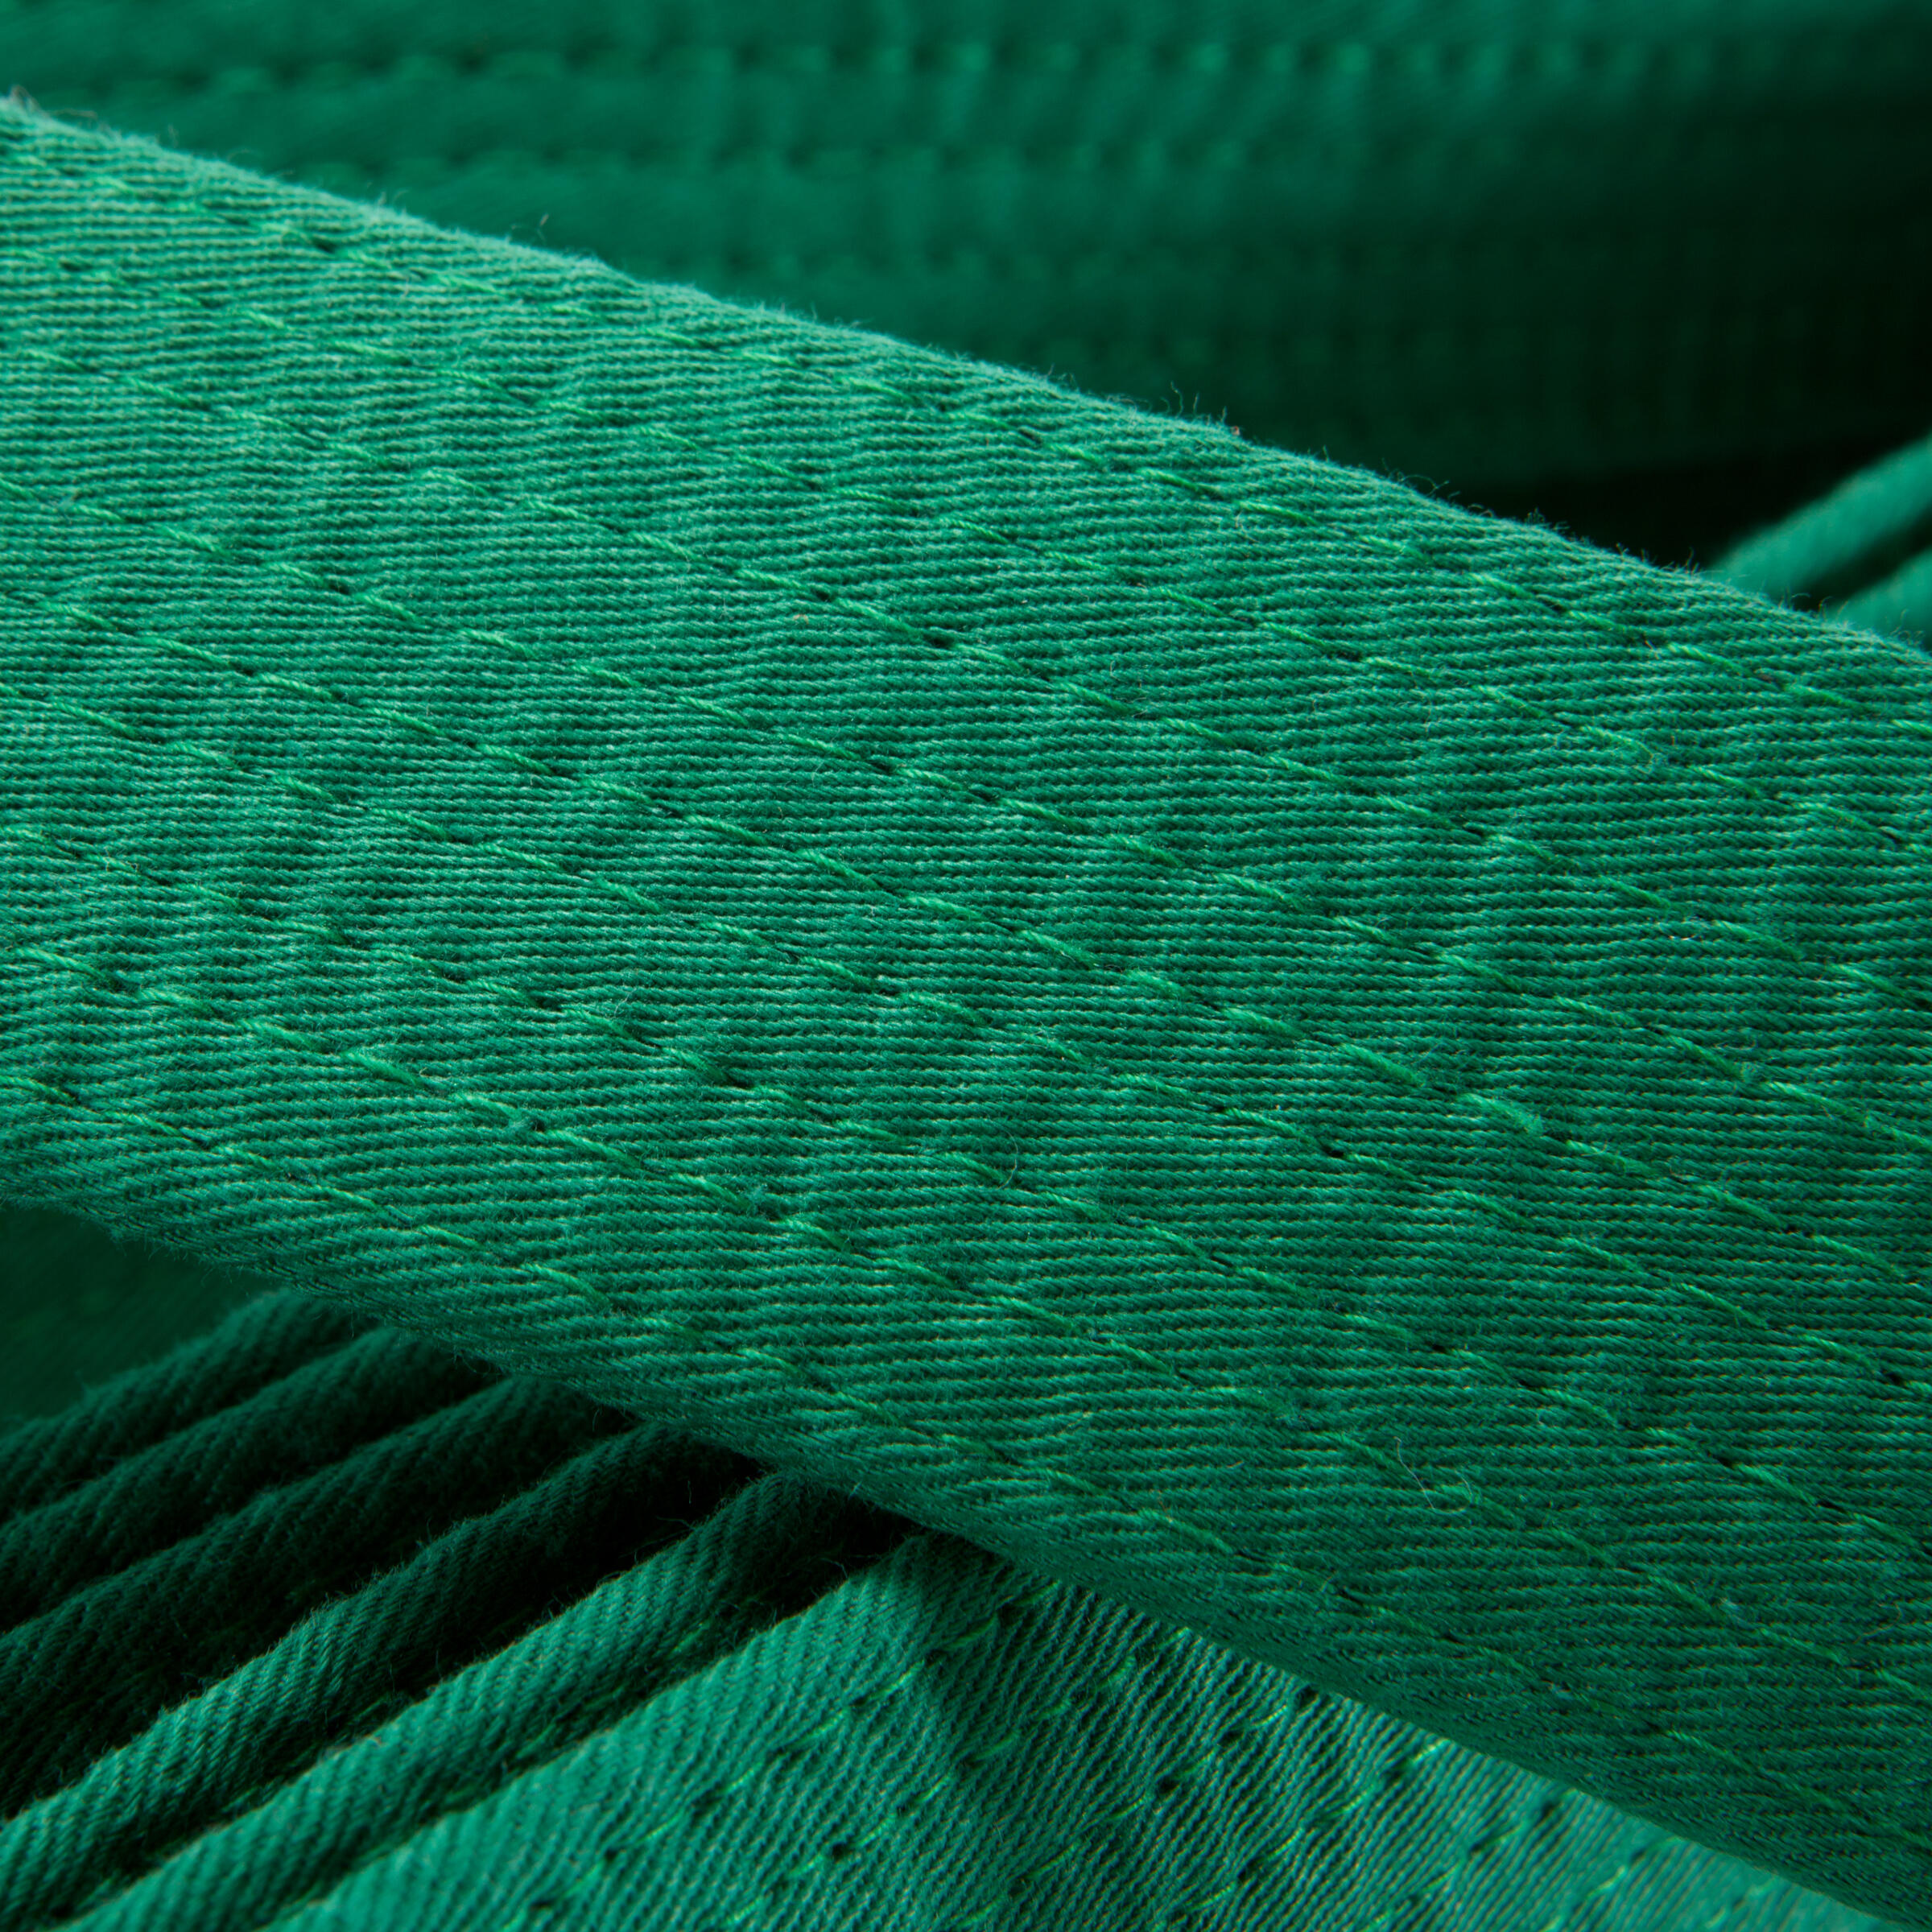 Пояс для единоборств 2,80 м зеленый OUTSHOCK, зеленый лес пояса для единоборств adidas пояс для единоборств adidas club желтый